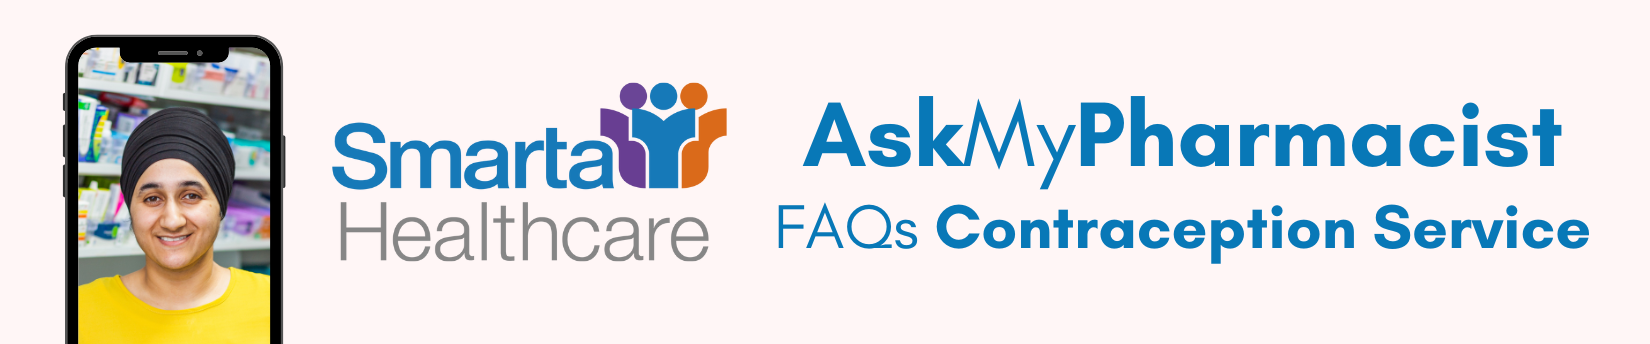 Smarta Healthcare AskMyPharmacist FAQs Contraception Service